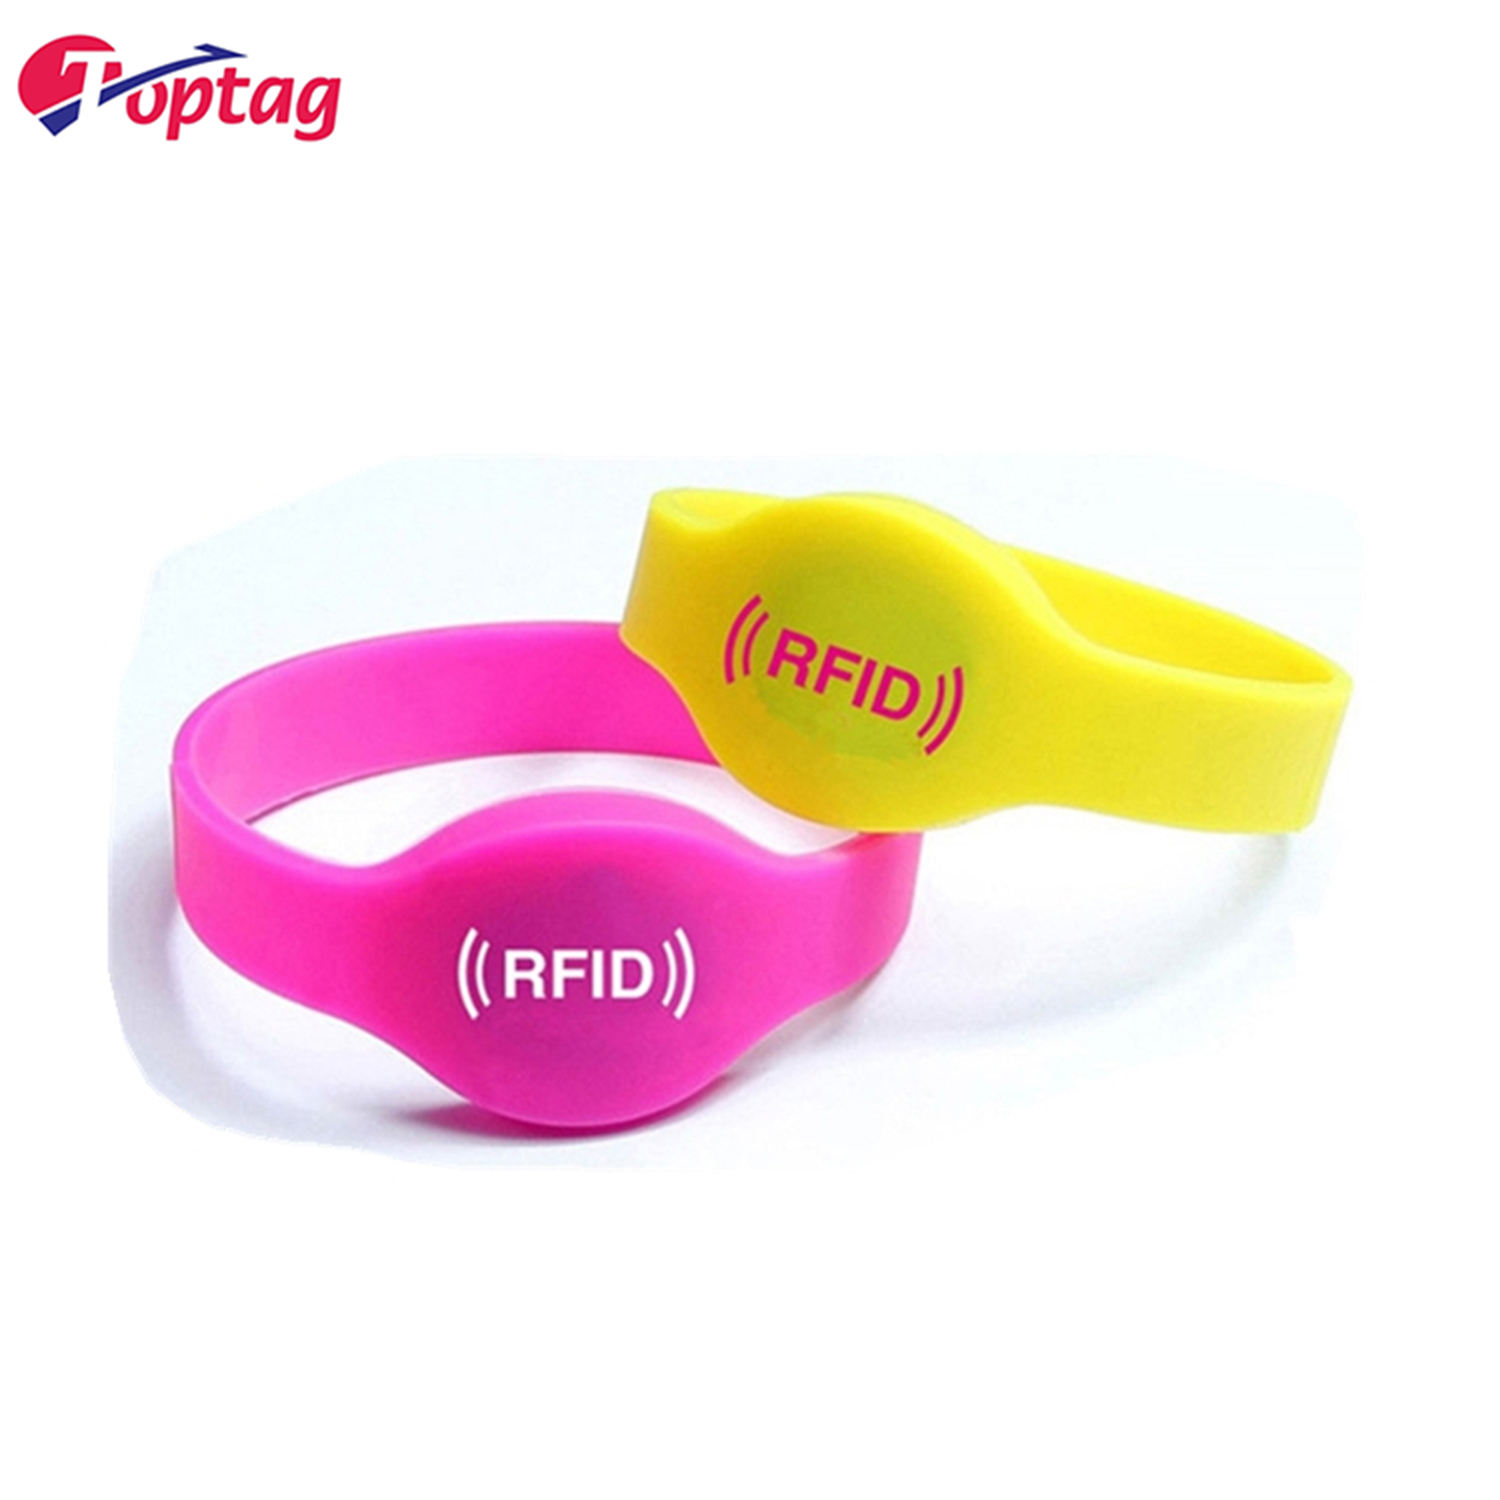 Personalized Fixed Size RFID LF/HF Silicone Wristband Reusable NFC Bracelet